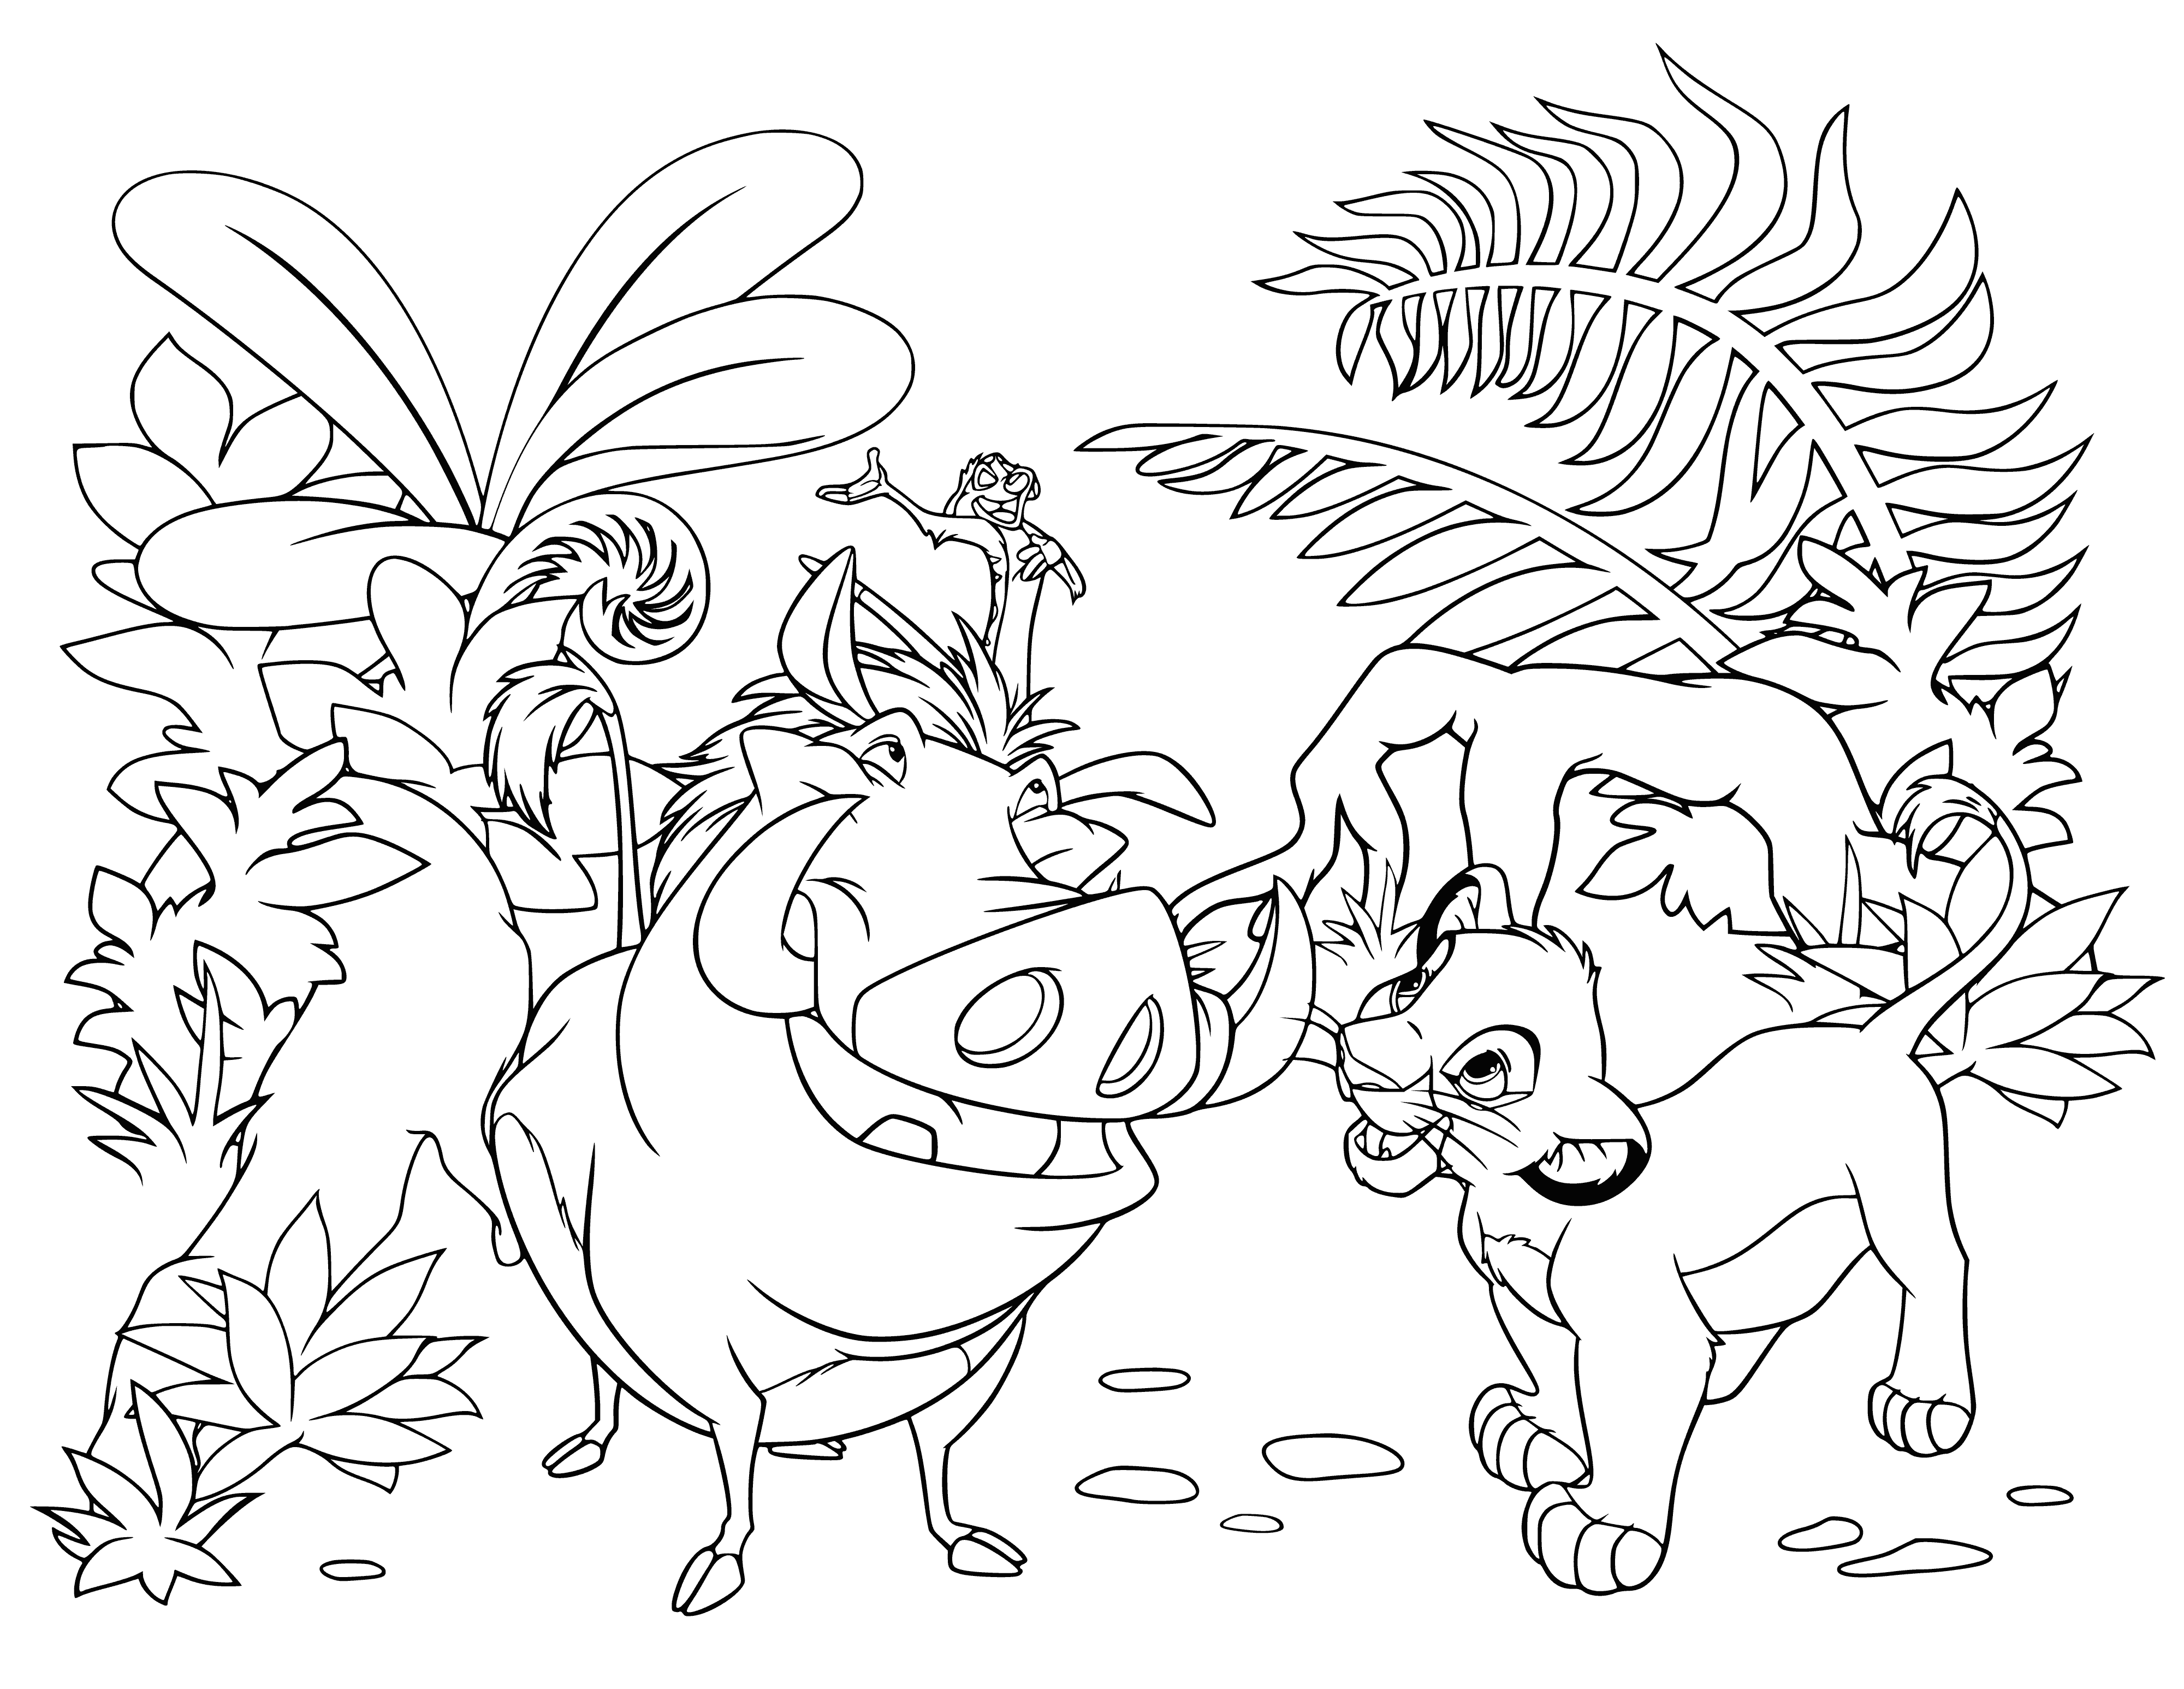 Pumbaa, Timon and Simba coloring page